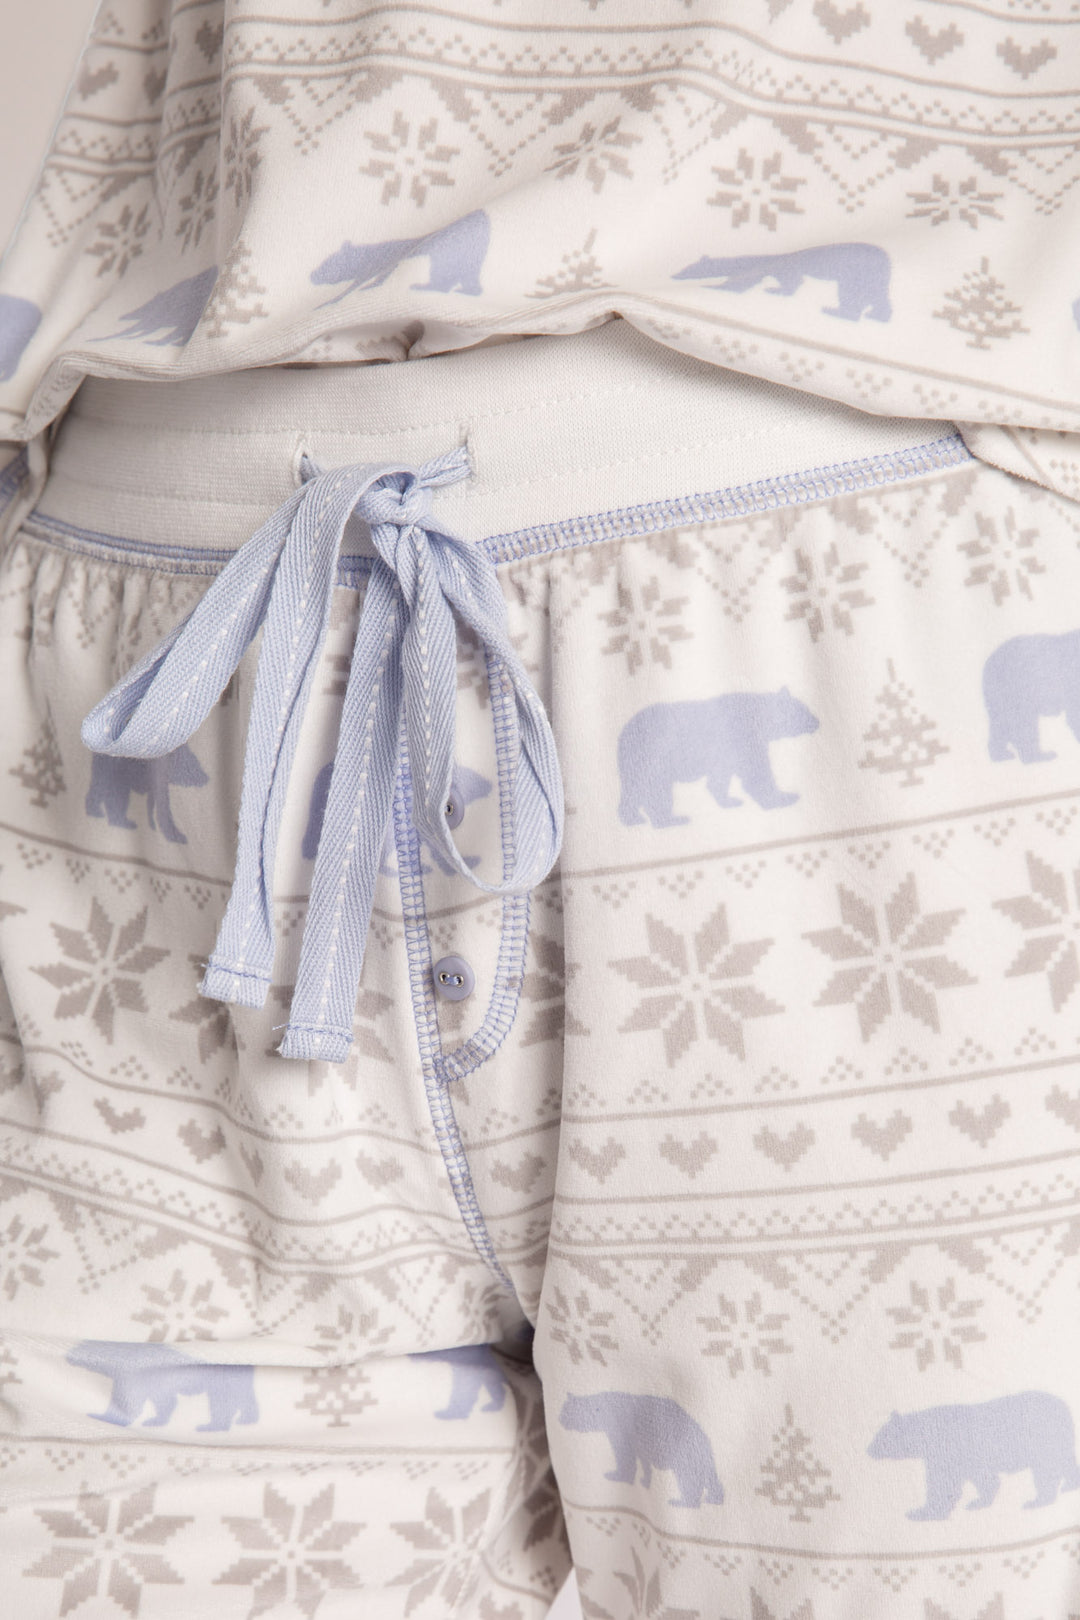 Matching velour jammie set top & pant in velour polar bear print. (7231881838692)